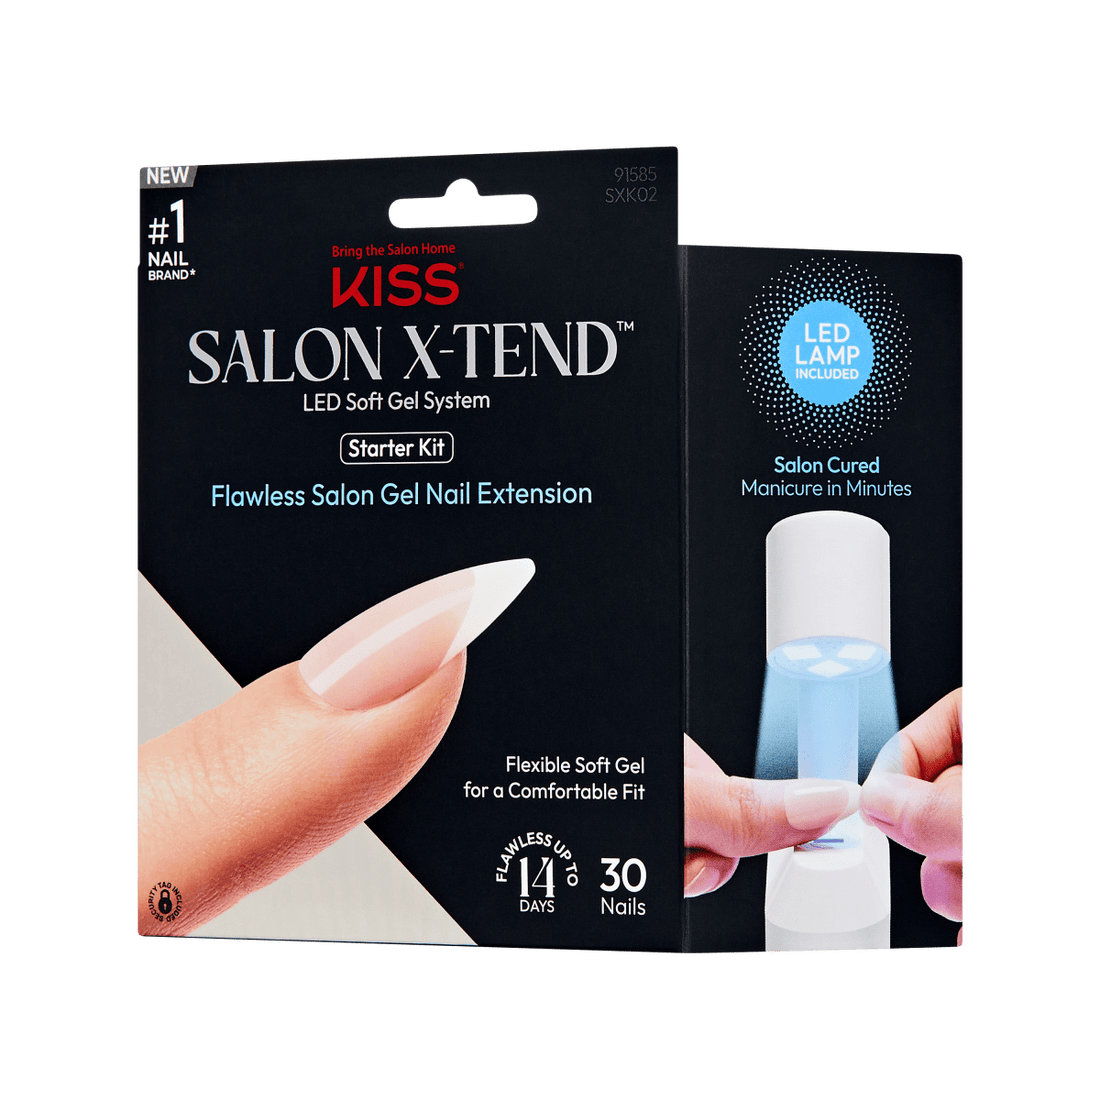 KISS Salon X-tend LED Soft Gel System | Pure